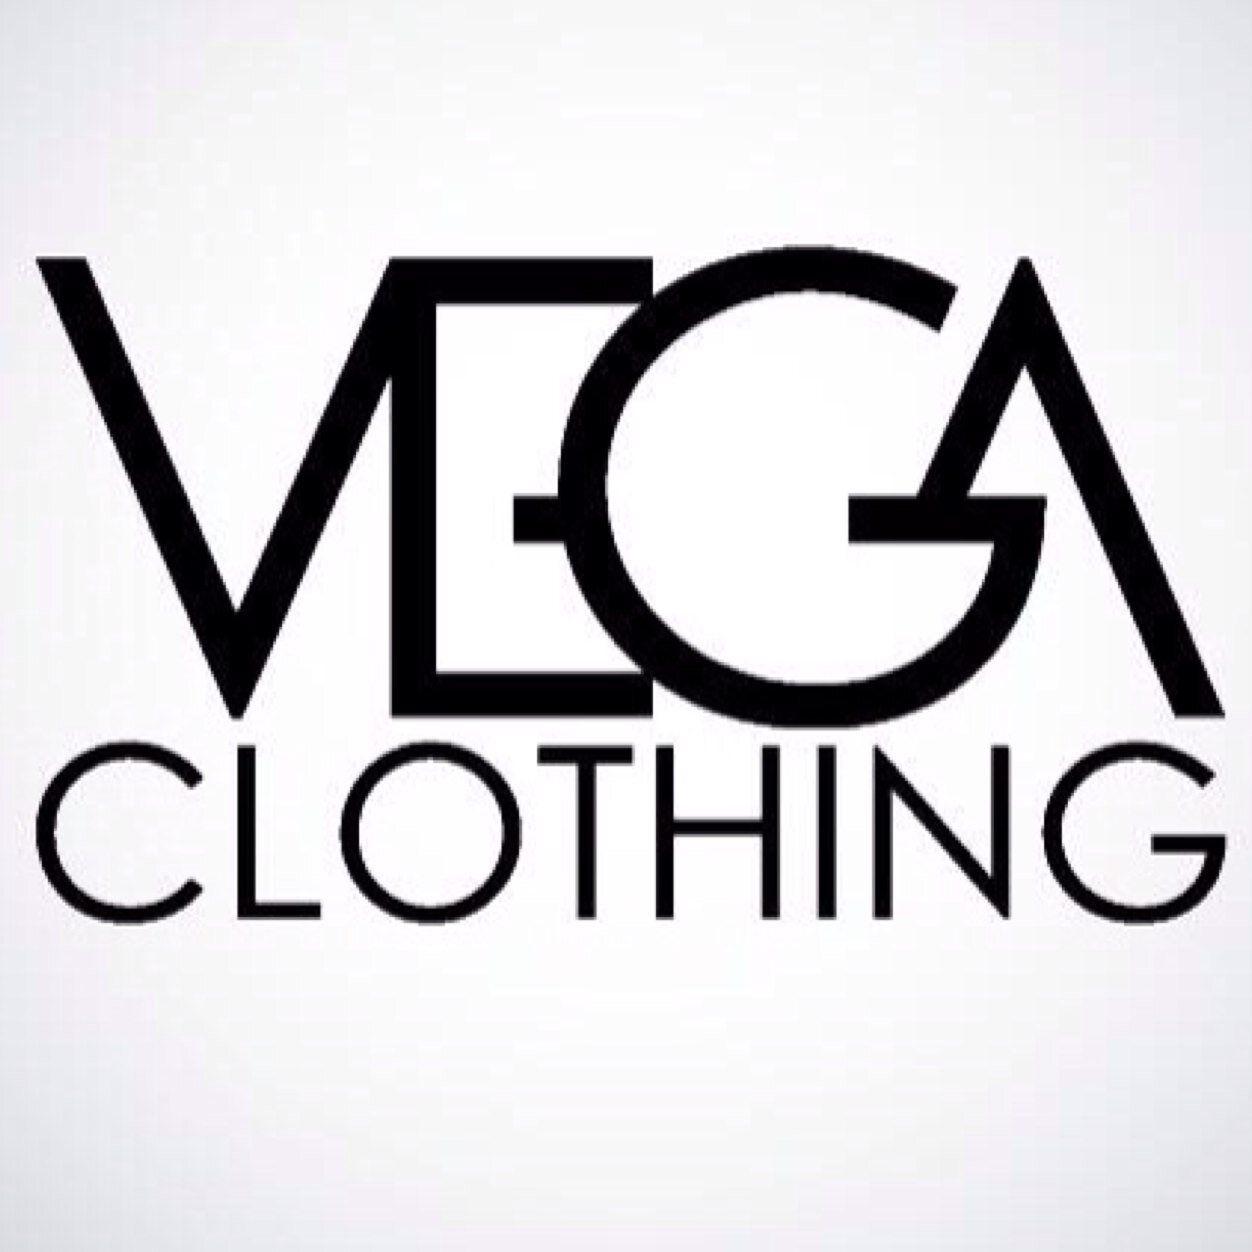 Well Known Clothing Logo - VEGA Clothing on Twitter: 